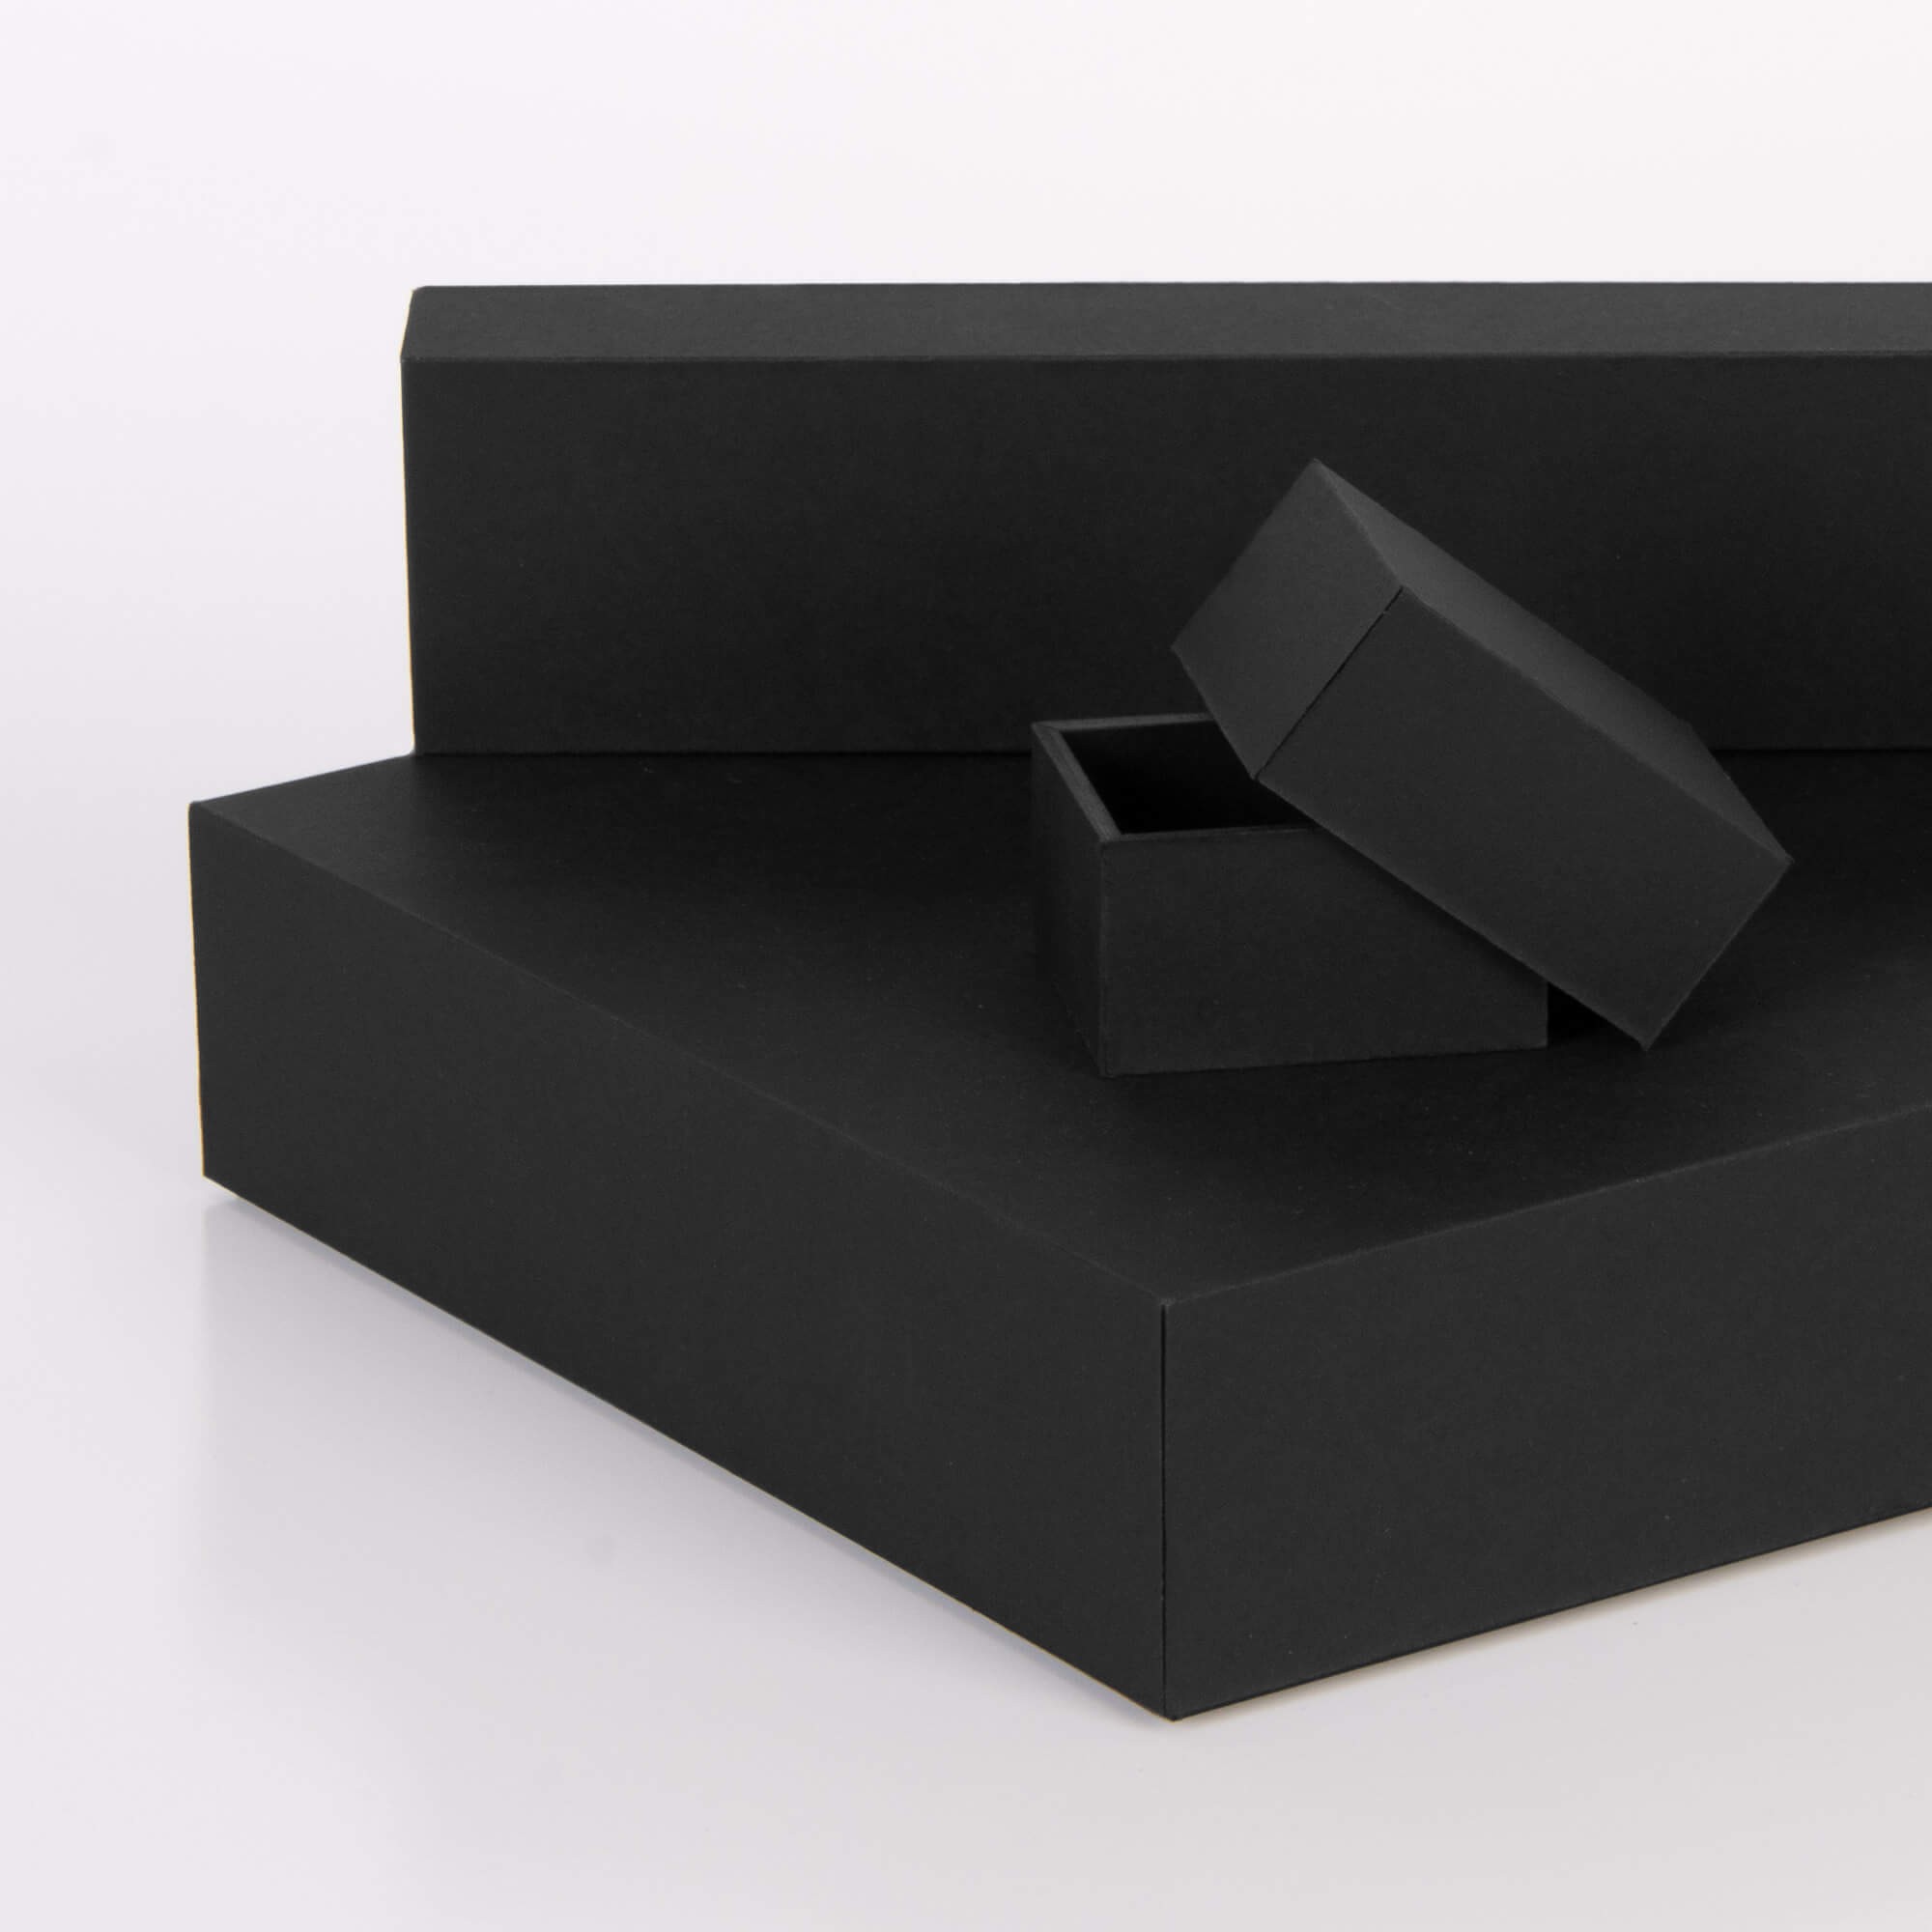 Cardboard KROMA All Black Packaging application example